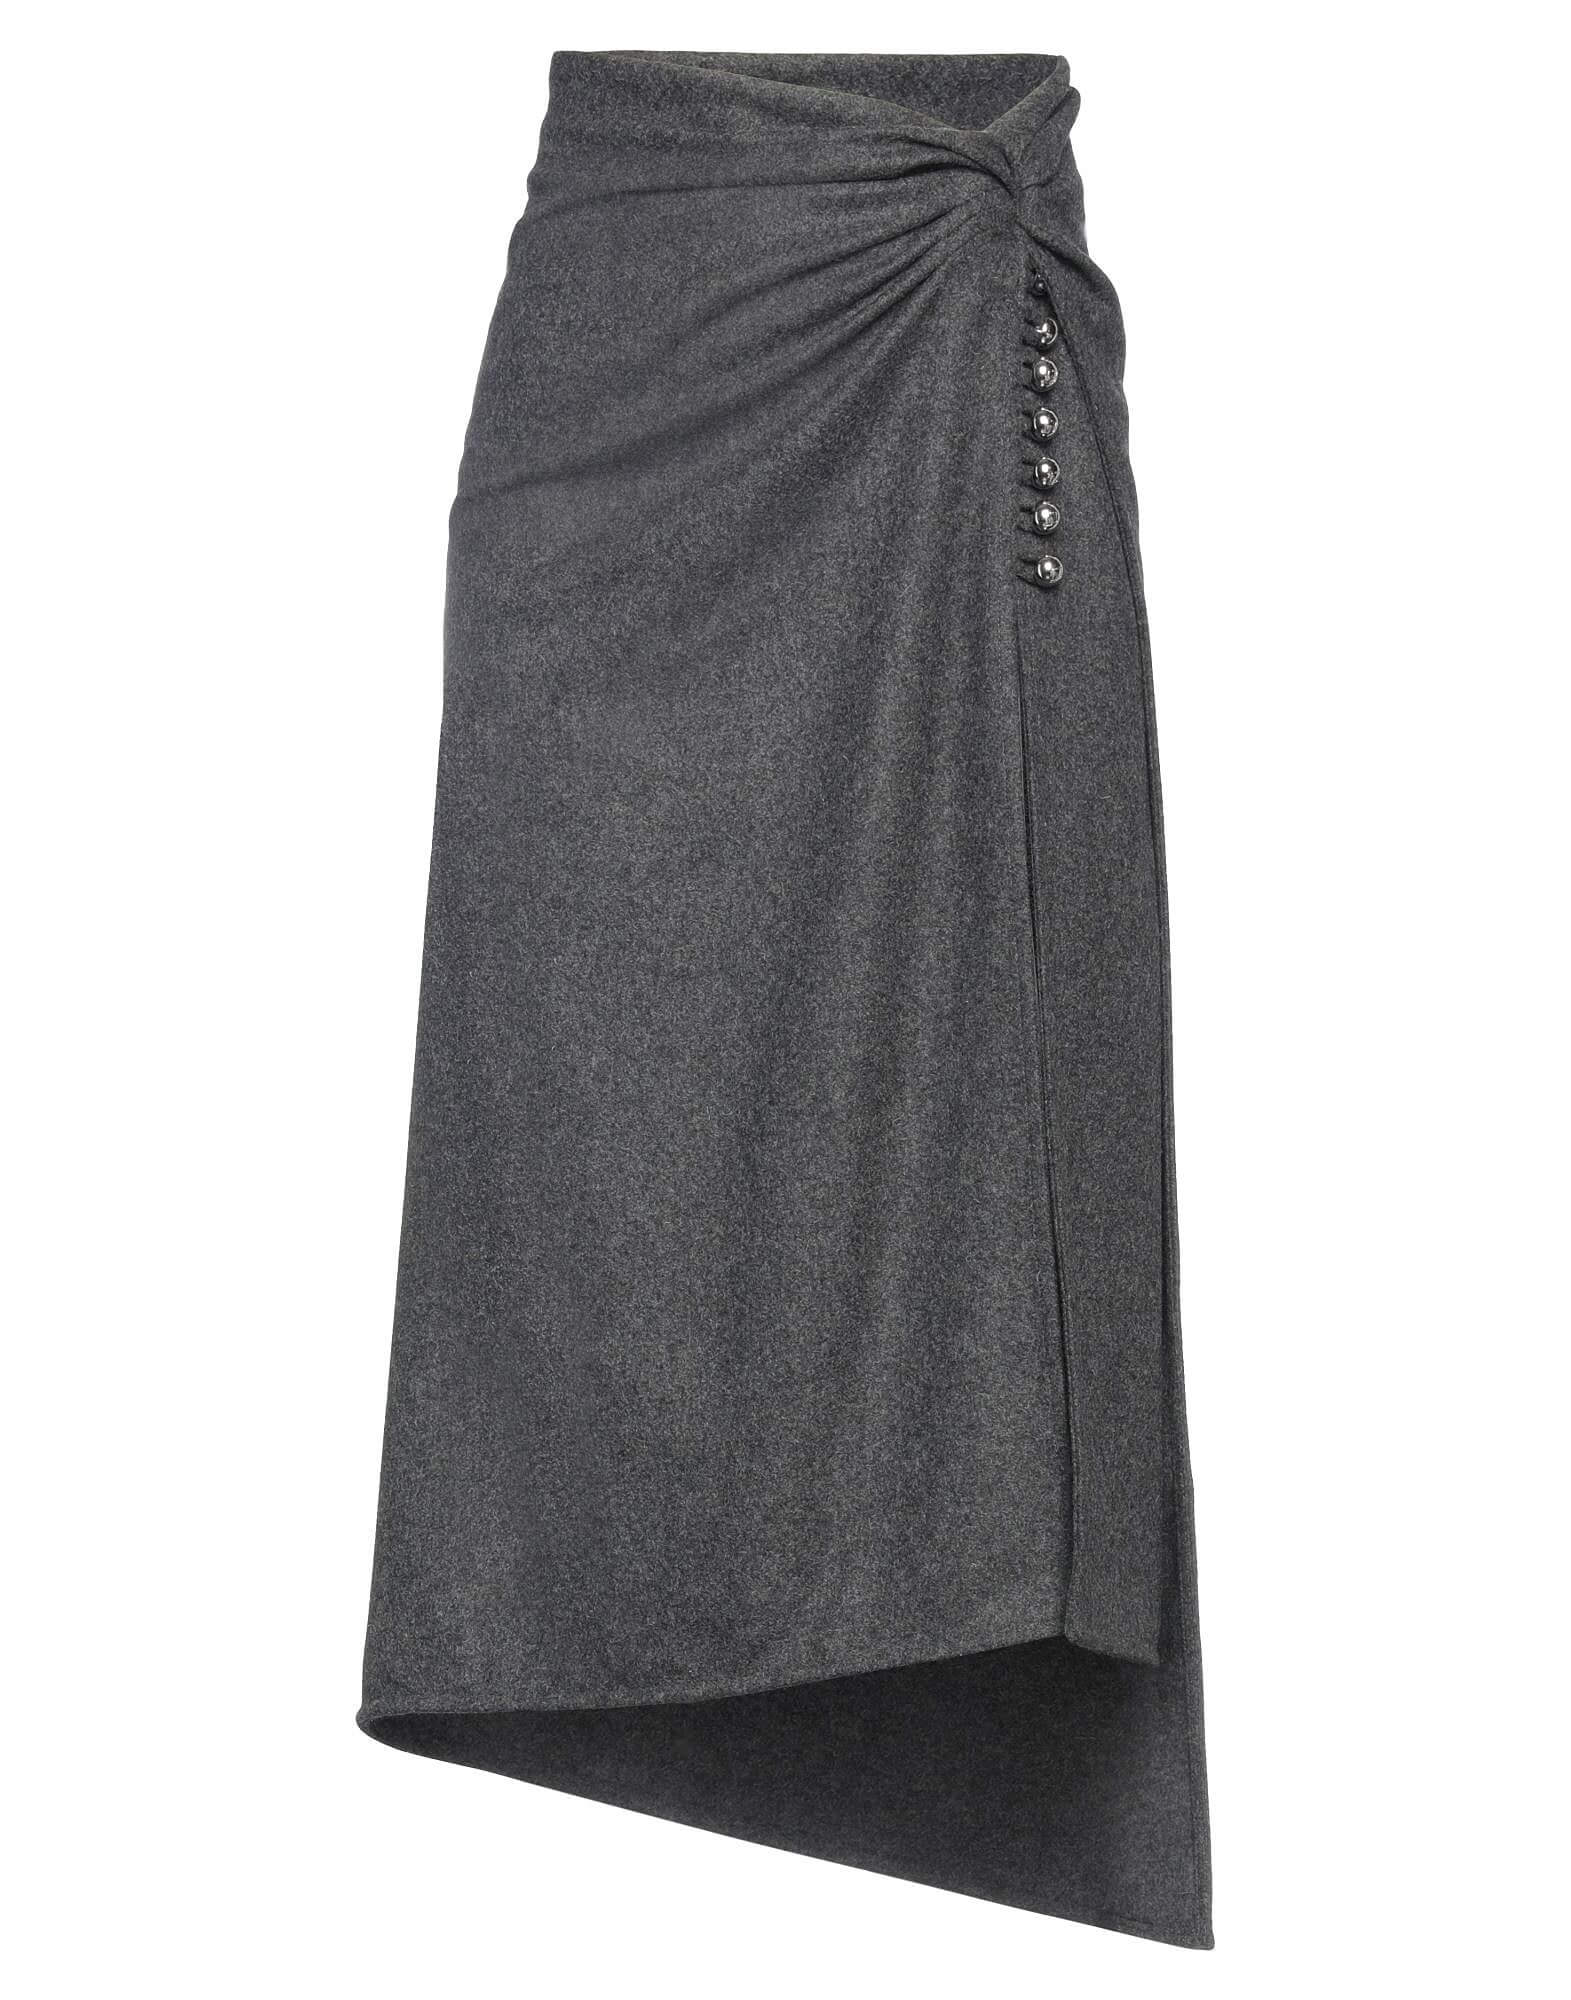 Юбка Paco Rabanne Midi, серый юбка карандаш cepheya миди размер 44 черный